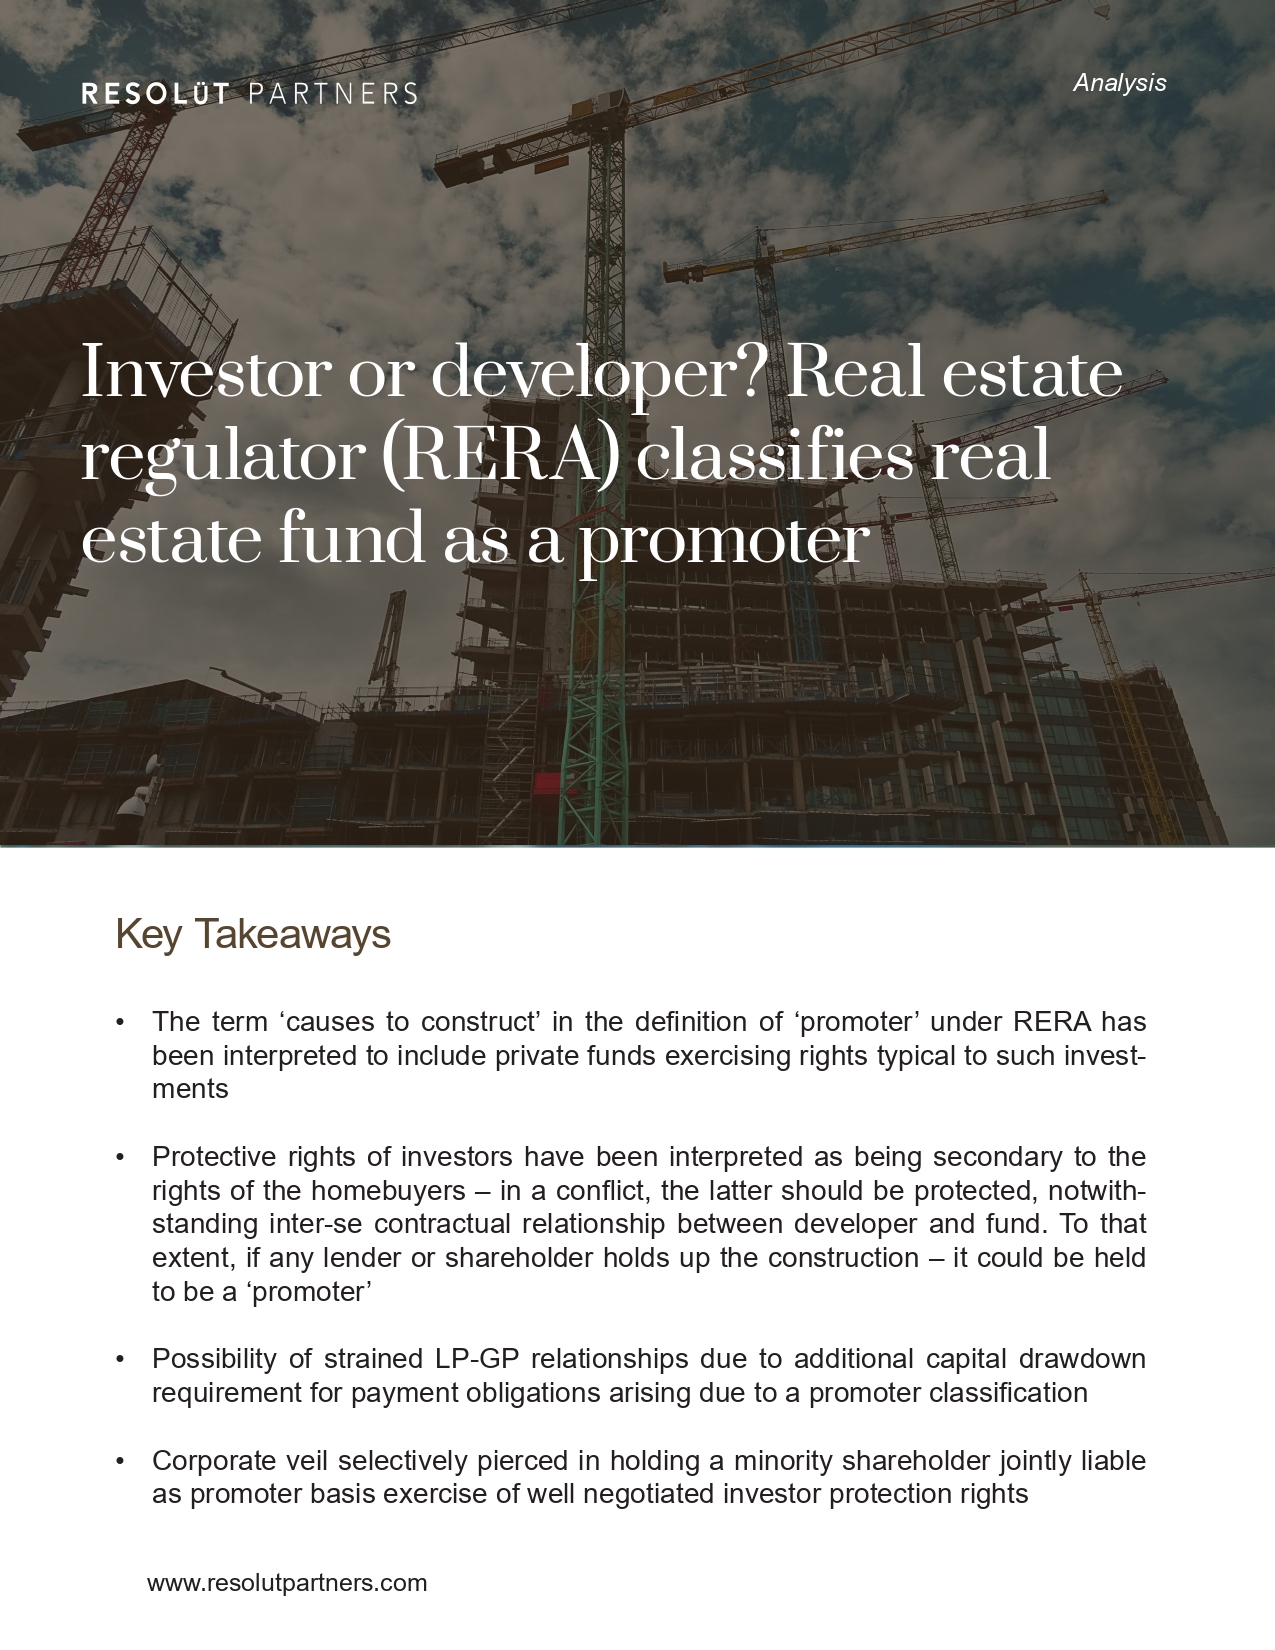 RERA - Resolut Partners_page-0001